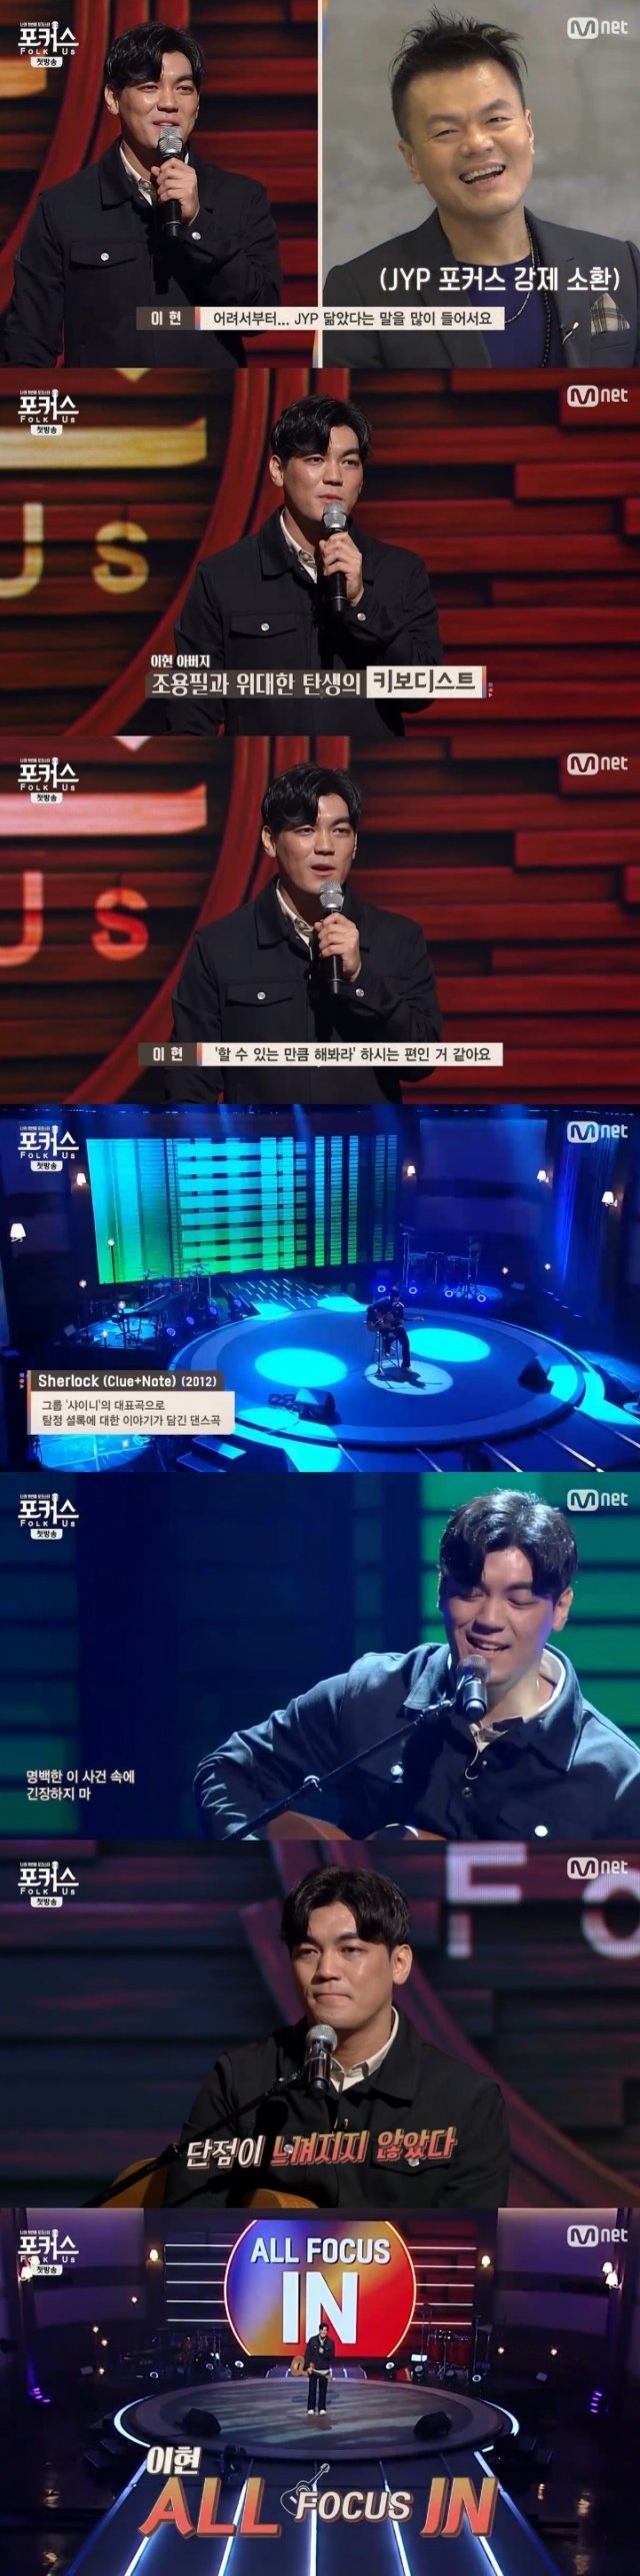 Mnet ‘포커스’ 캡처 © 뉴스1